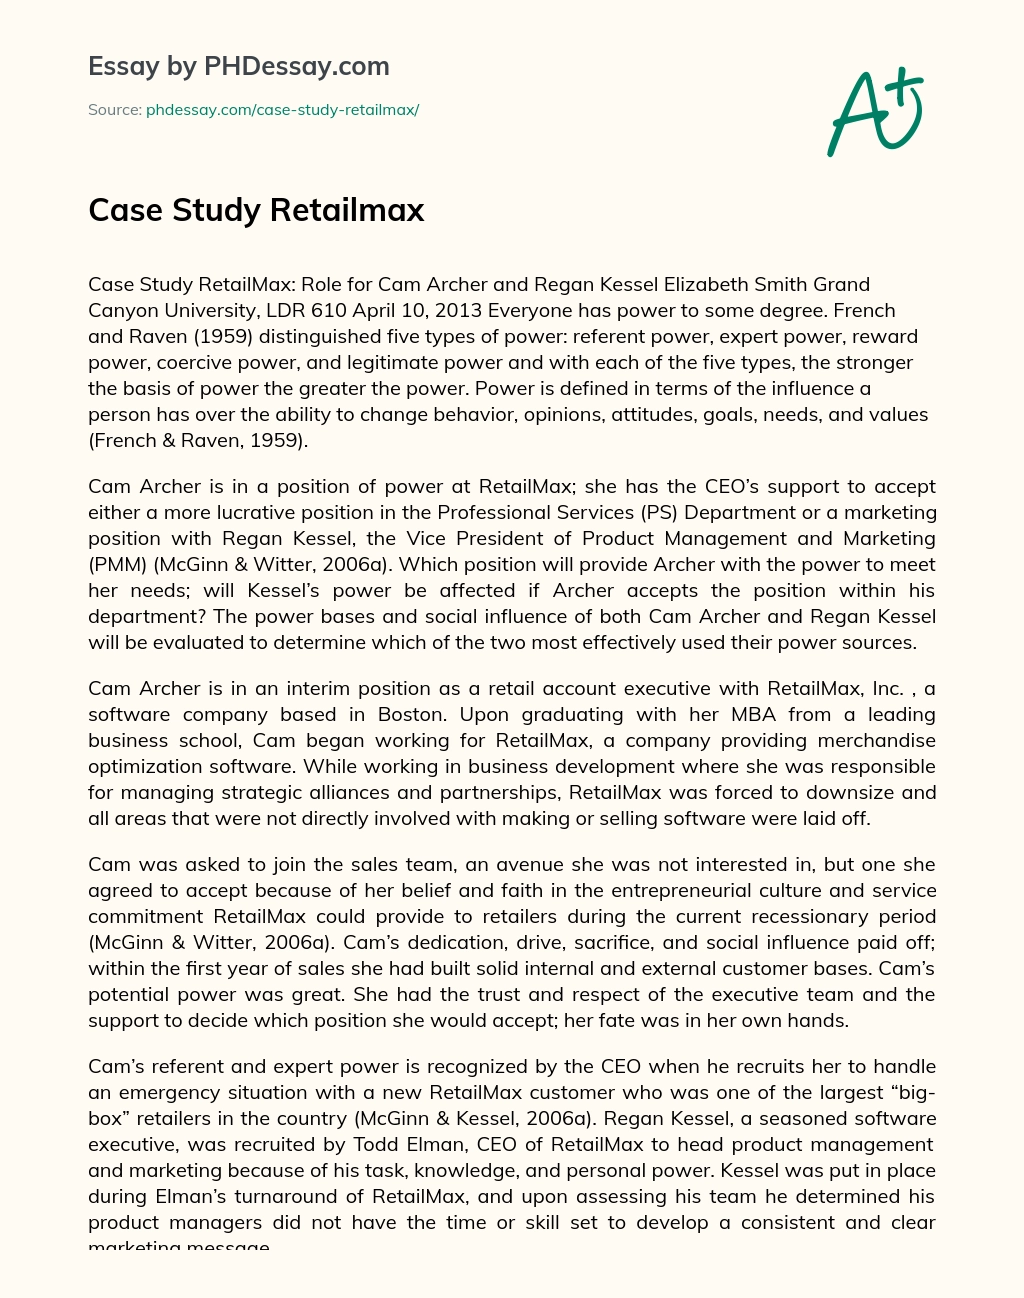 Case Study Retailmax essay